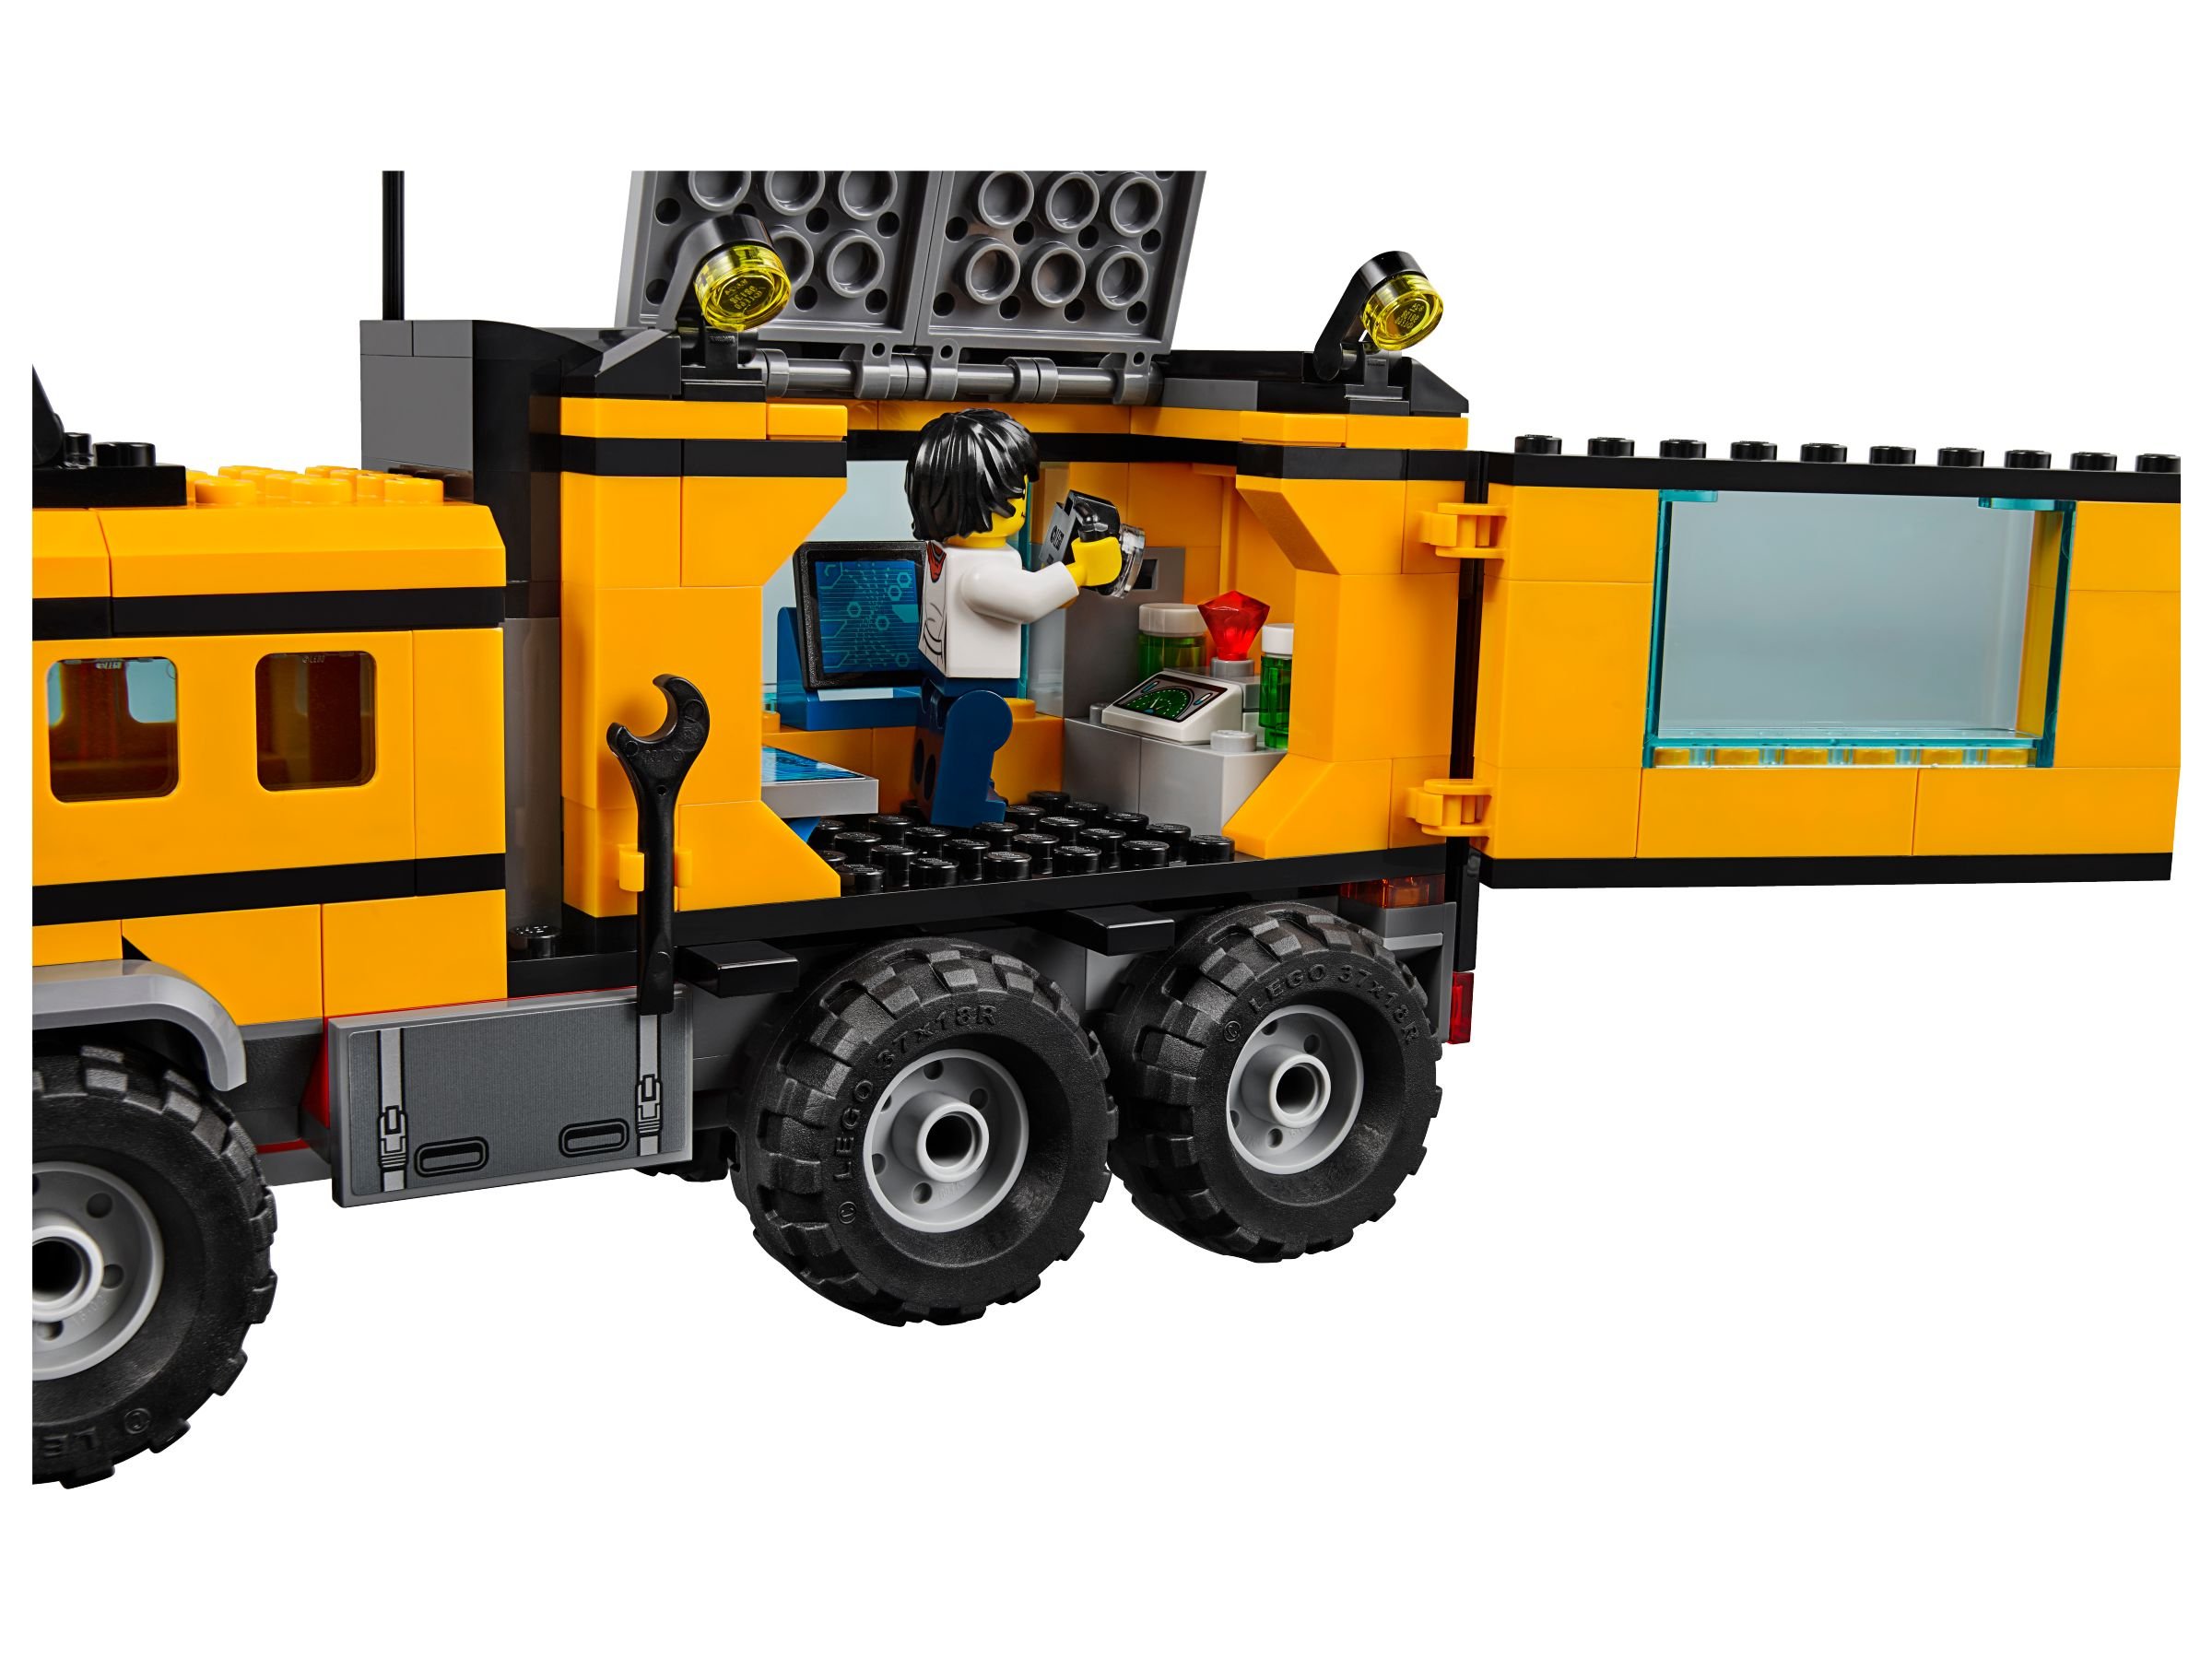 LEGO City 60160 Mobiles Dschungel-Labor LEGO_60160_alt4.jpg